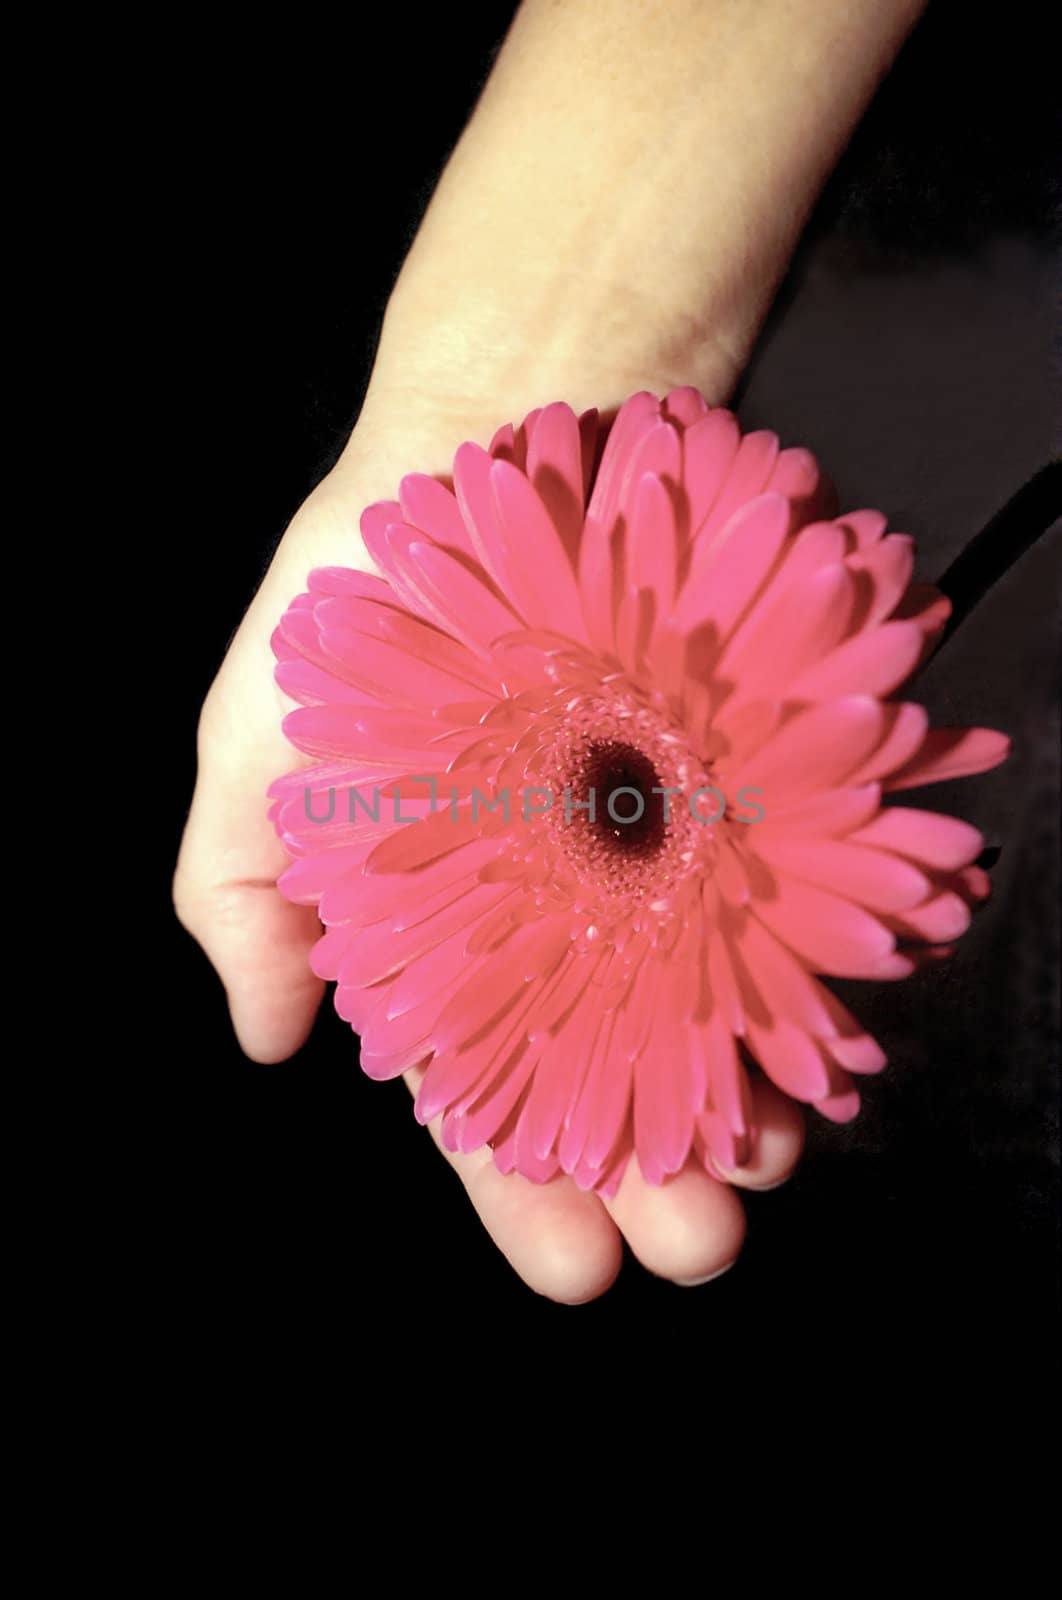 Pink  gerbera in a hand against dark background